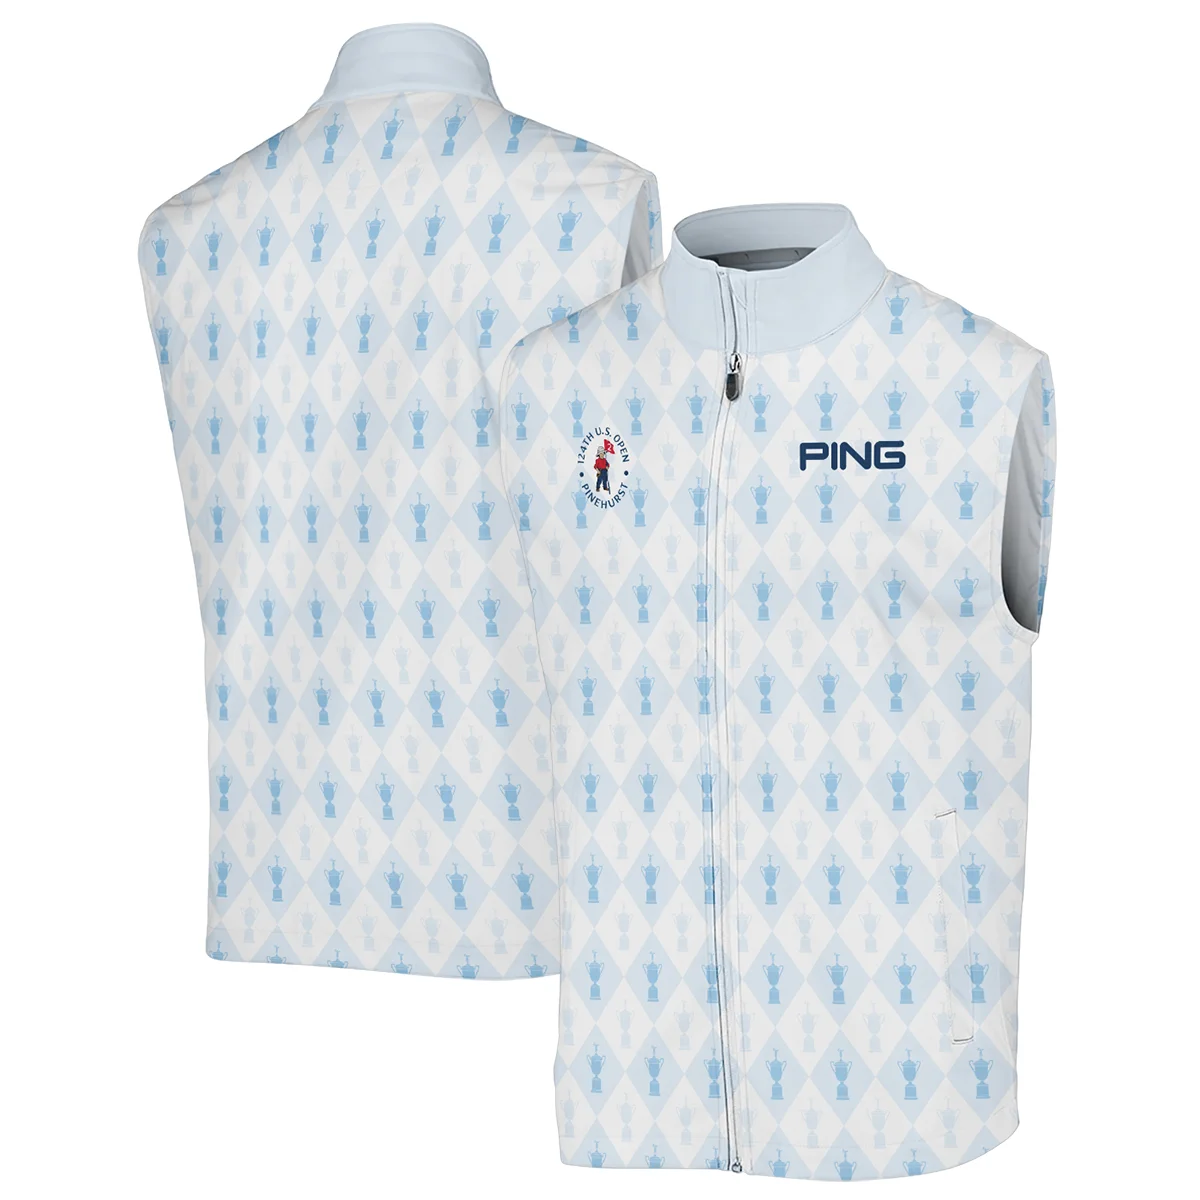 PGA Tour 124th U.S. Open Pinehurst Ping Sleeveless Jacket Sports Pattern Cup Color Light Blue Sleeveless Jacket